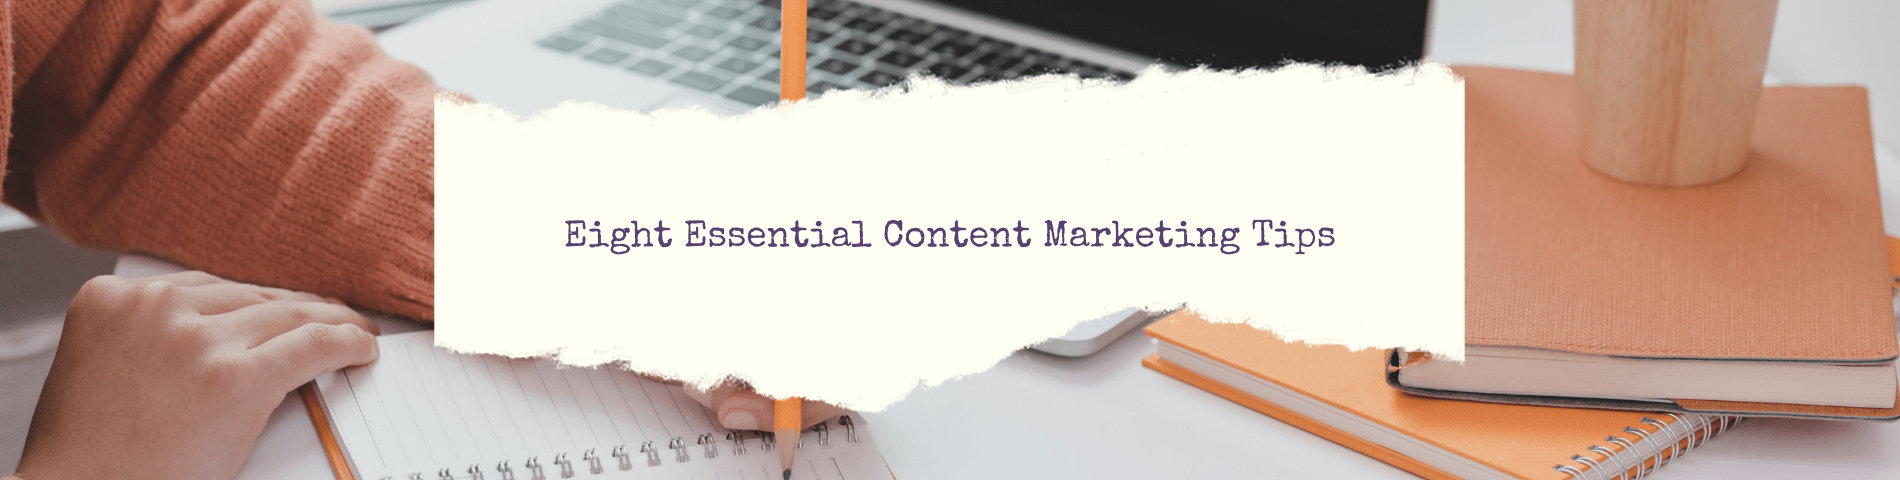 Eight Essential Content Marketing Tips | Linguakey Blog